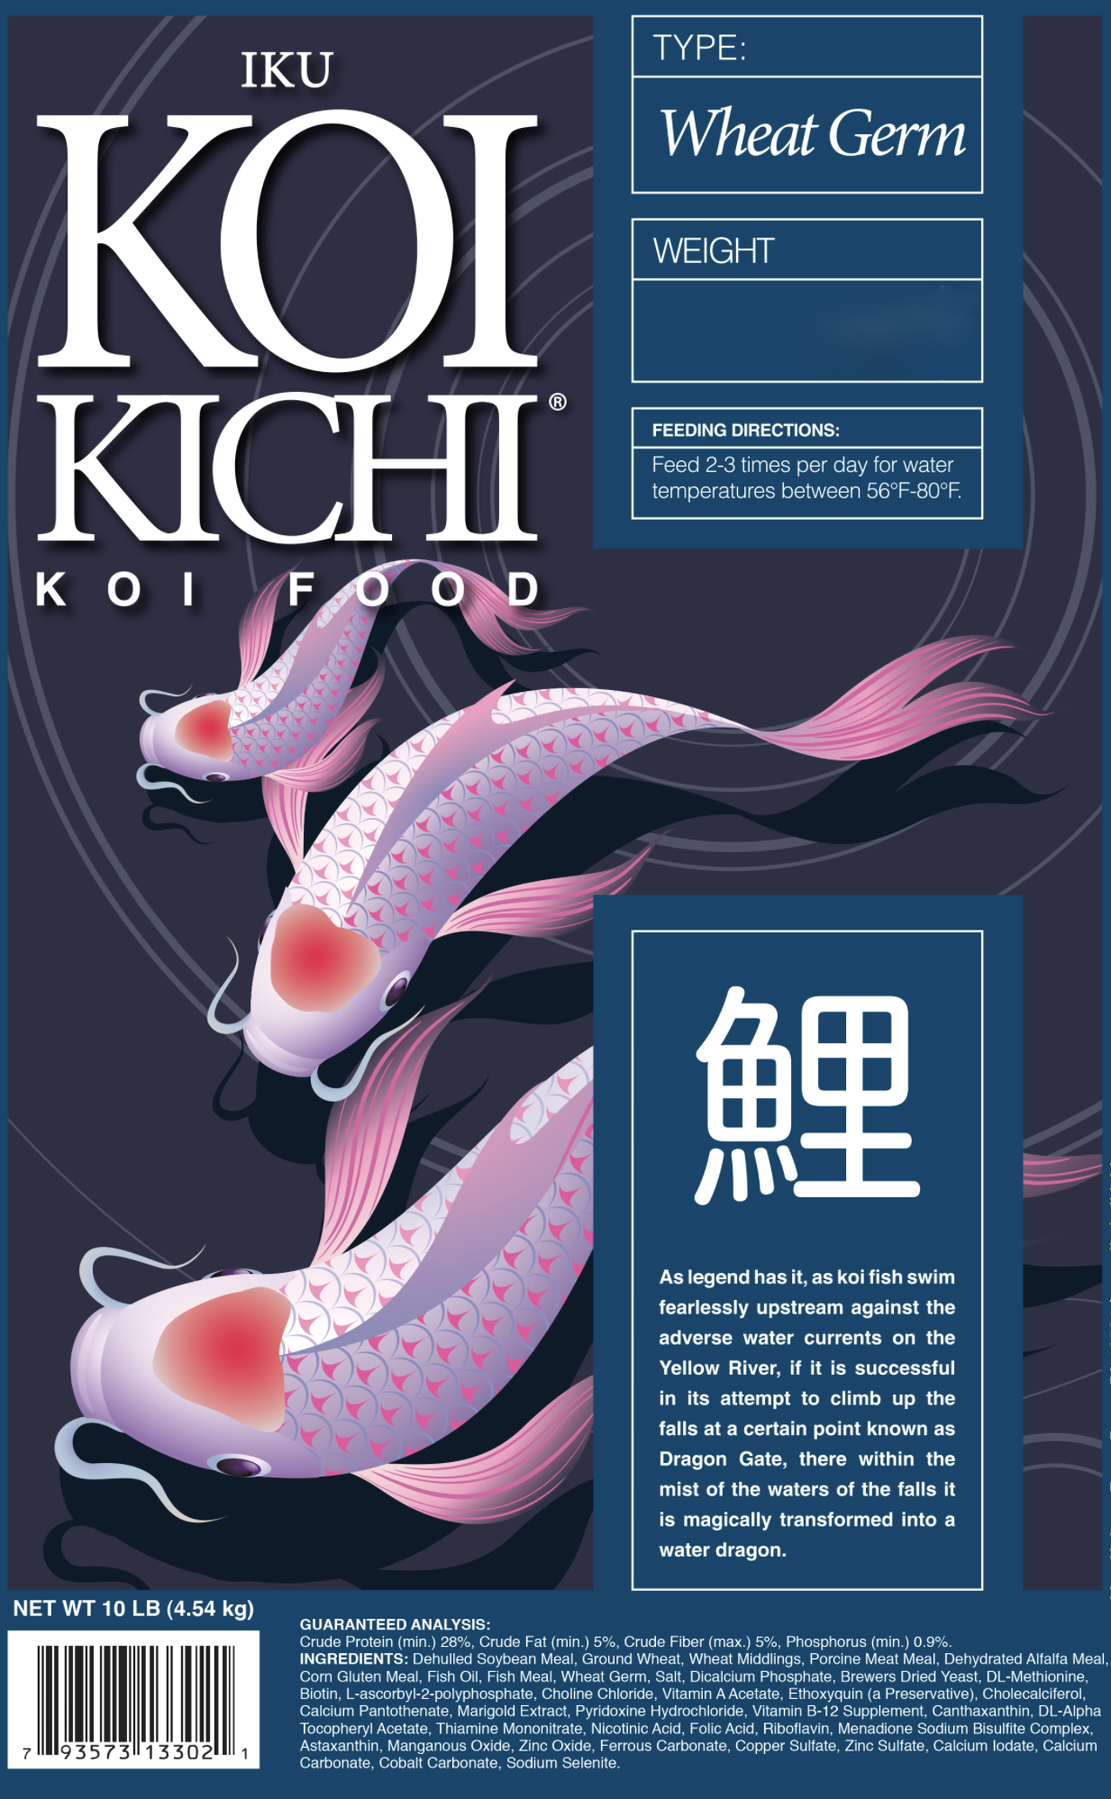 Iku Koi Kichi Wheat Germ Koi Fish Food - 10 lbs.